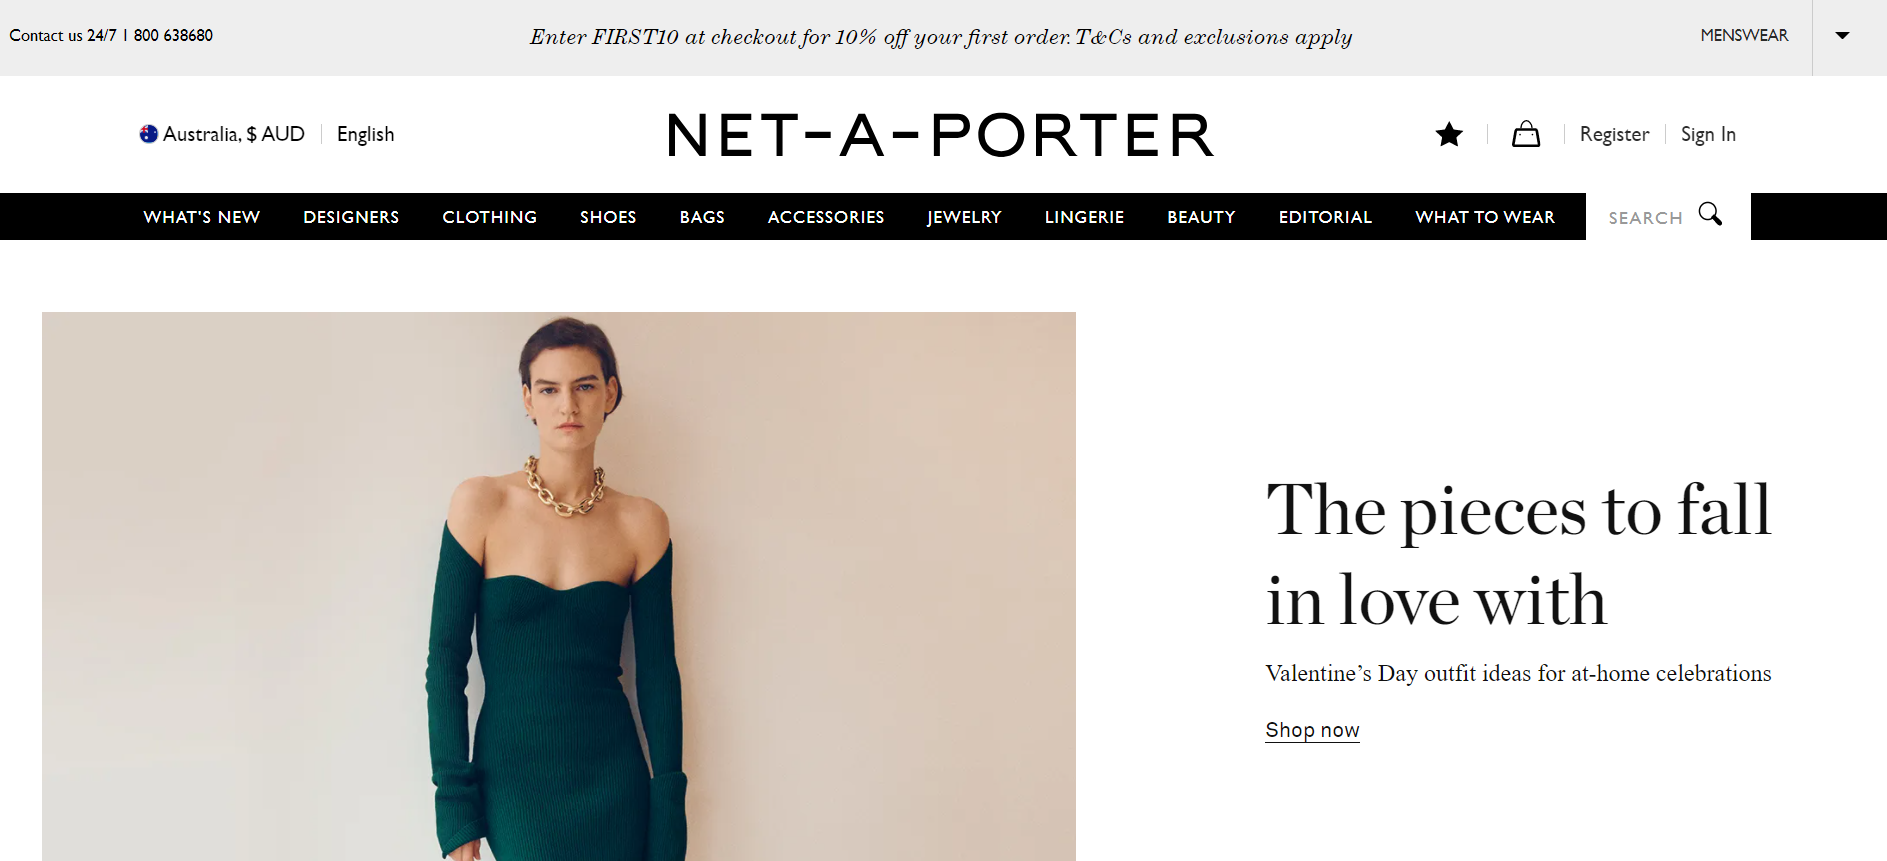 Net-A-Porter website homepage